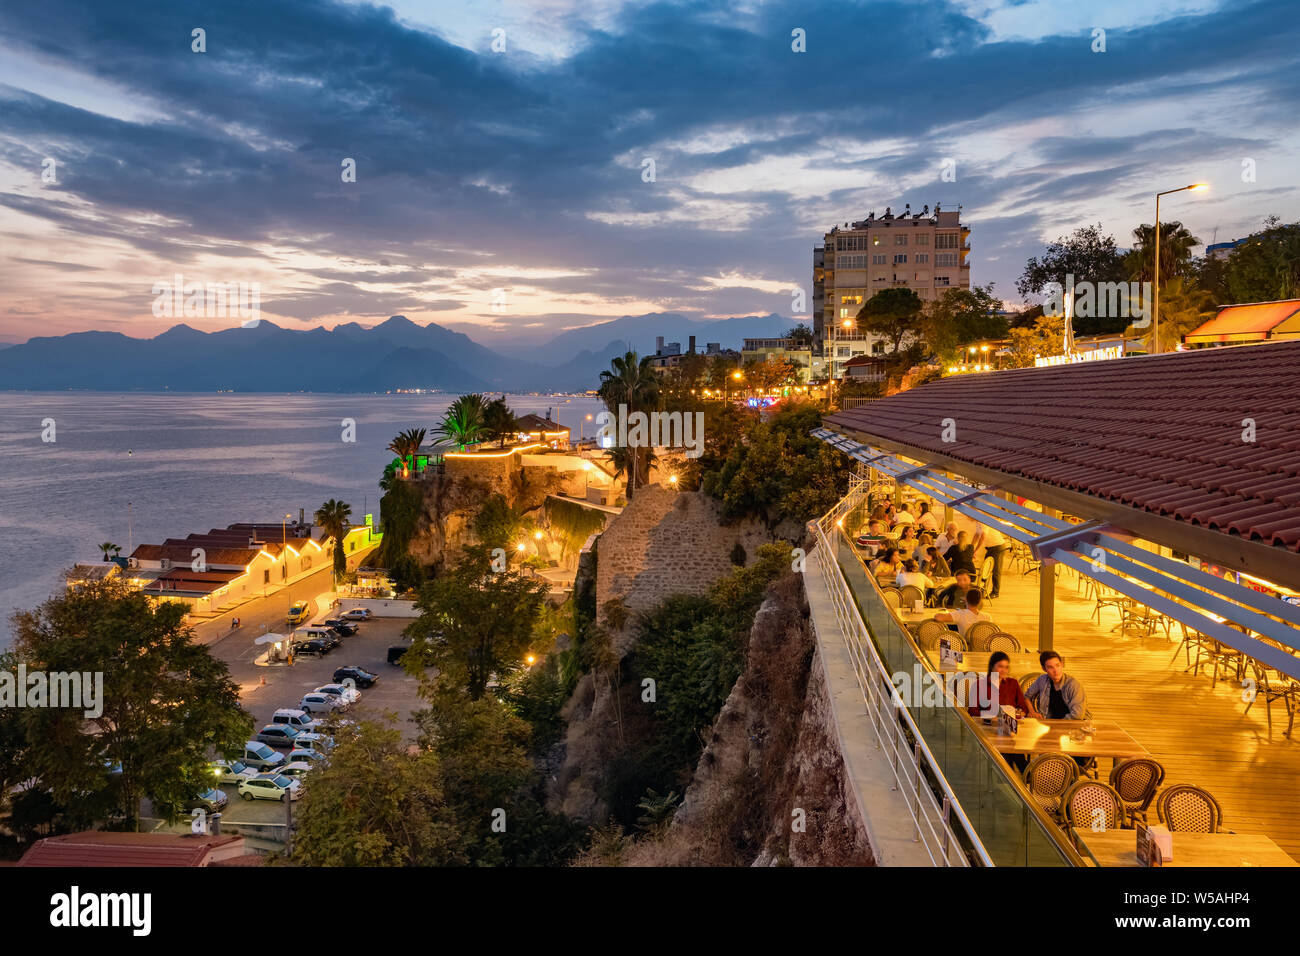 Antalya, Turkey - October 23, 2018: Outdoor cafe in Antalya old town called Kaleici at sunset, Turkey Stock Photo